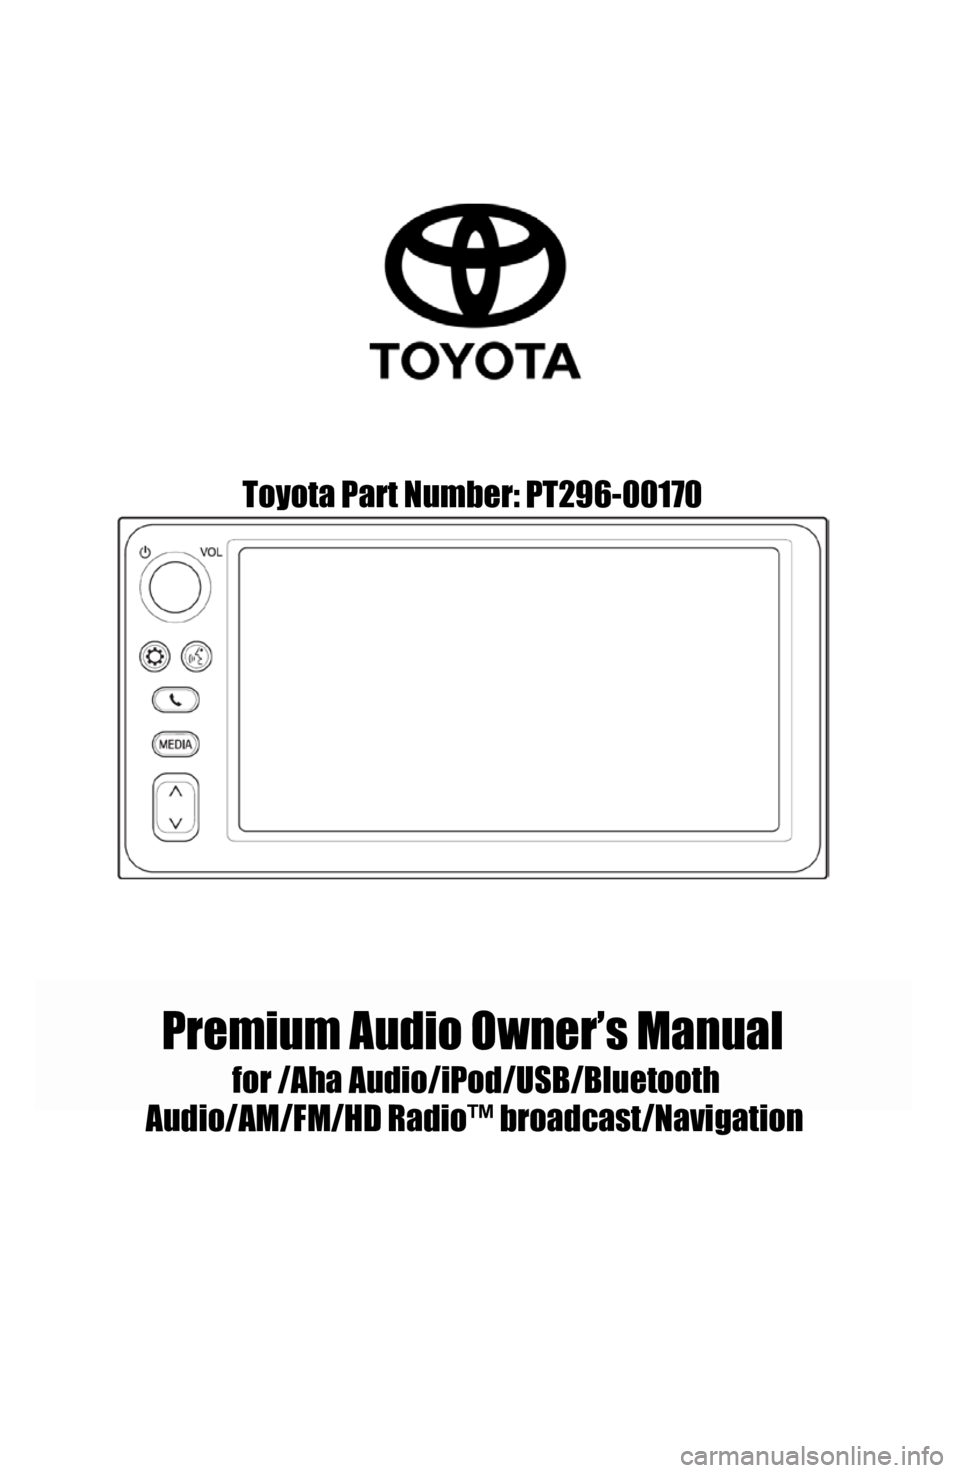 TOYOTA COROLLA iM 2018  Accessories, Audio & Navigation (in English) Toyota Part Number: PT296-00170
Premium Audio Owner’s Manual
for /AhaAudio/iPod/USB/Bluetooth 
Audio /AM/F M/HD Radio™ broadcast/Navigatio n 